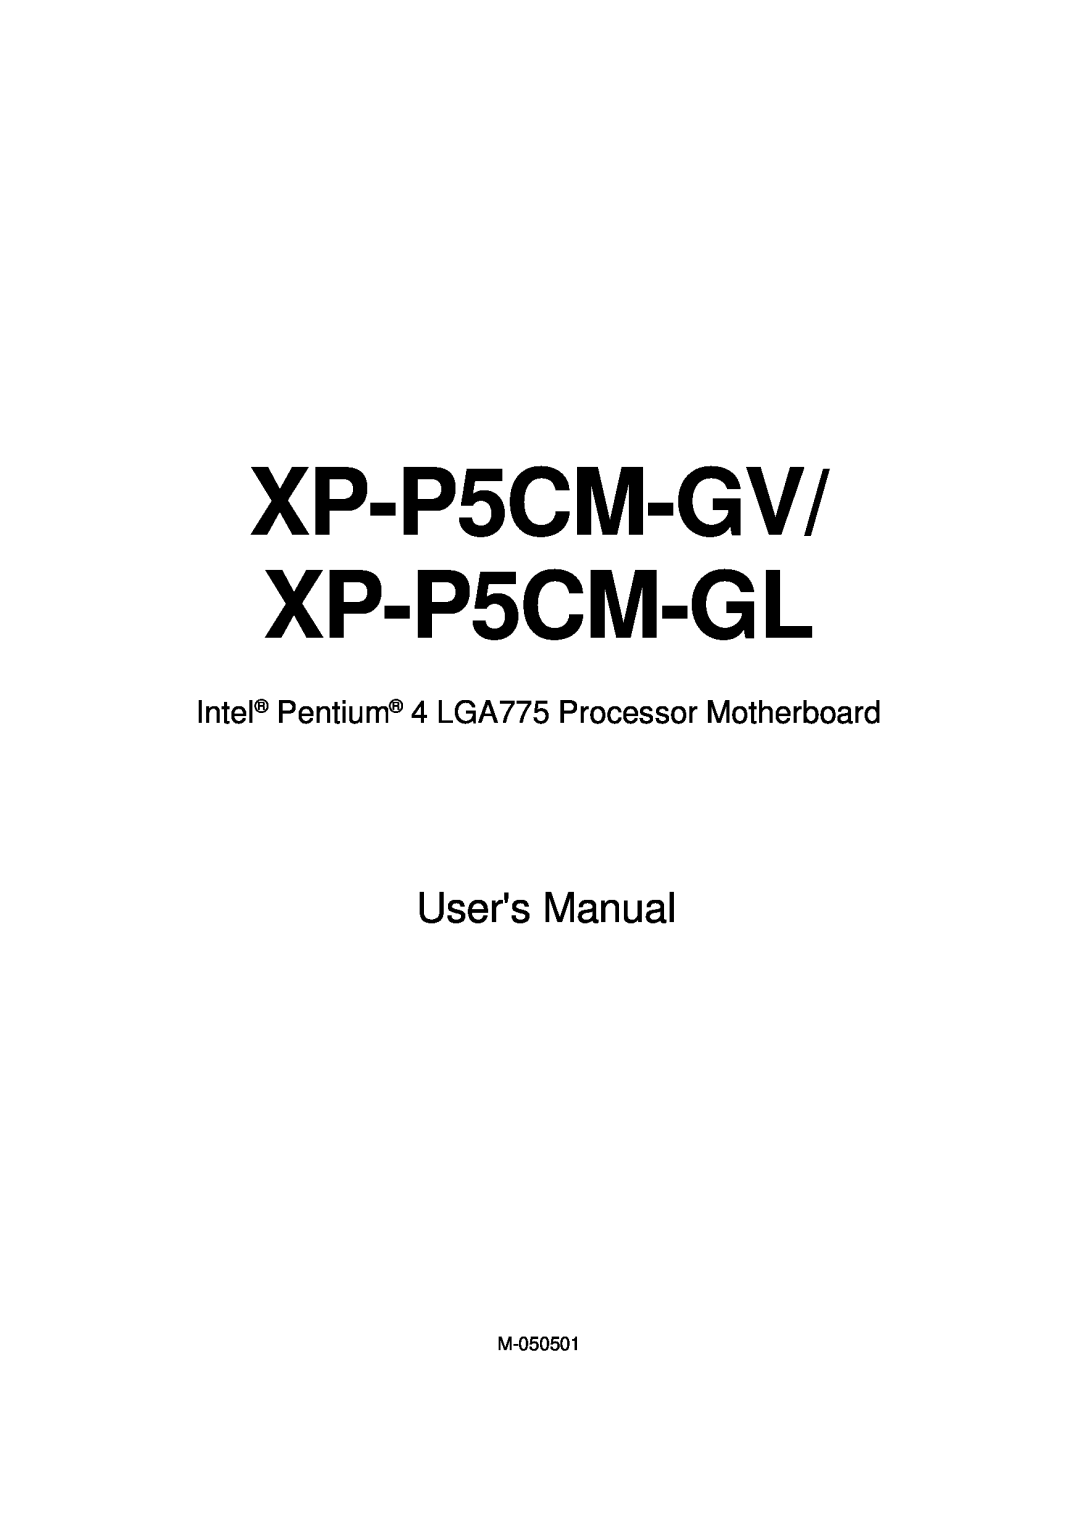 Intel user manual XP-P5CM-GV/ XP-P5CM-GL, Users Manual, Intel Pentium 4 LGA775 Processor Motherboard 